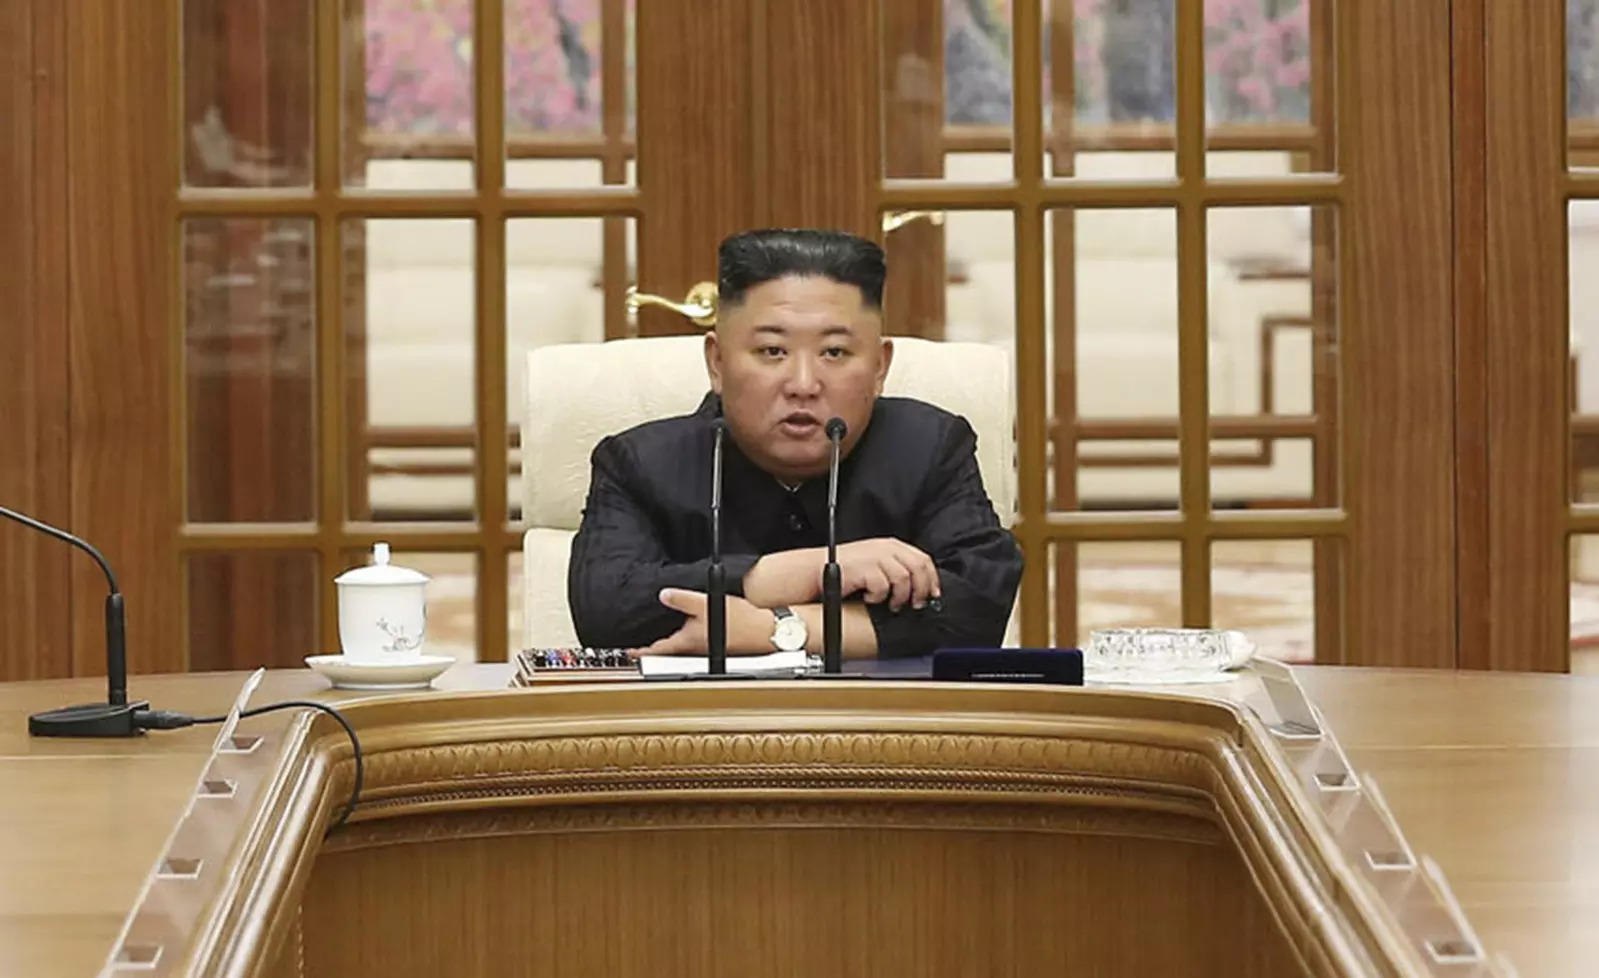 Kim Jong Un attends a meeting in Pyongyang, North Korea.